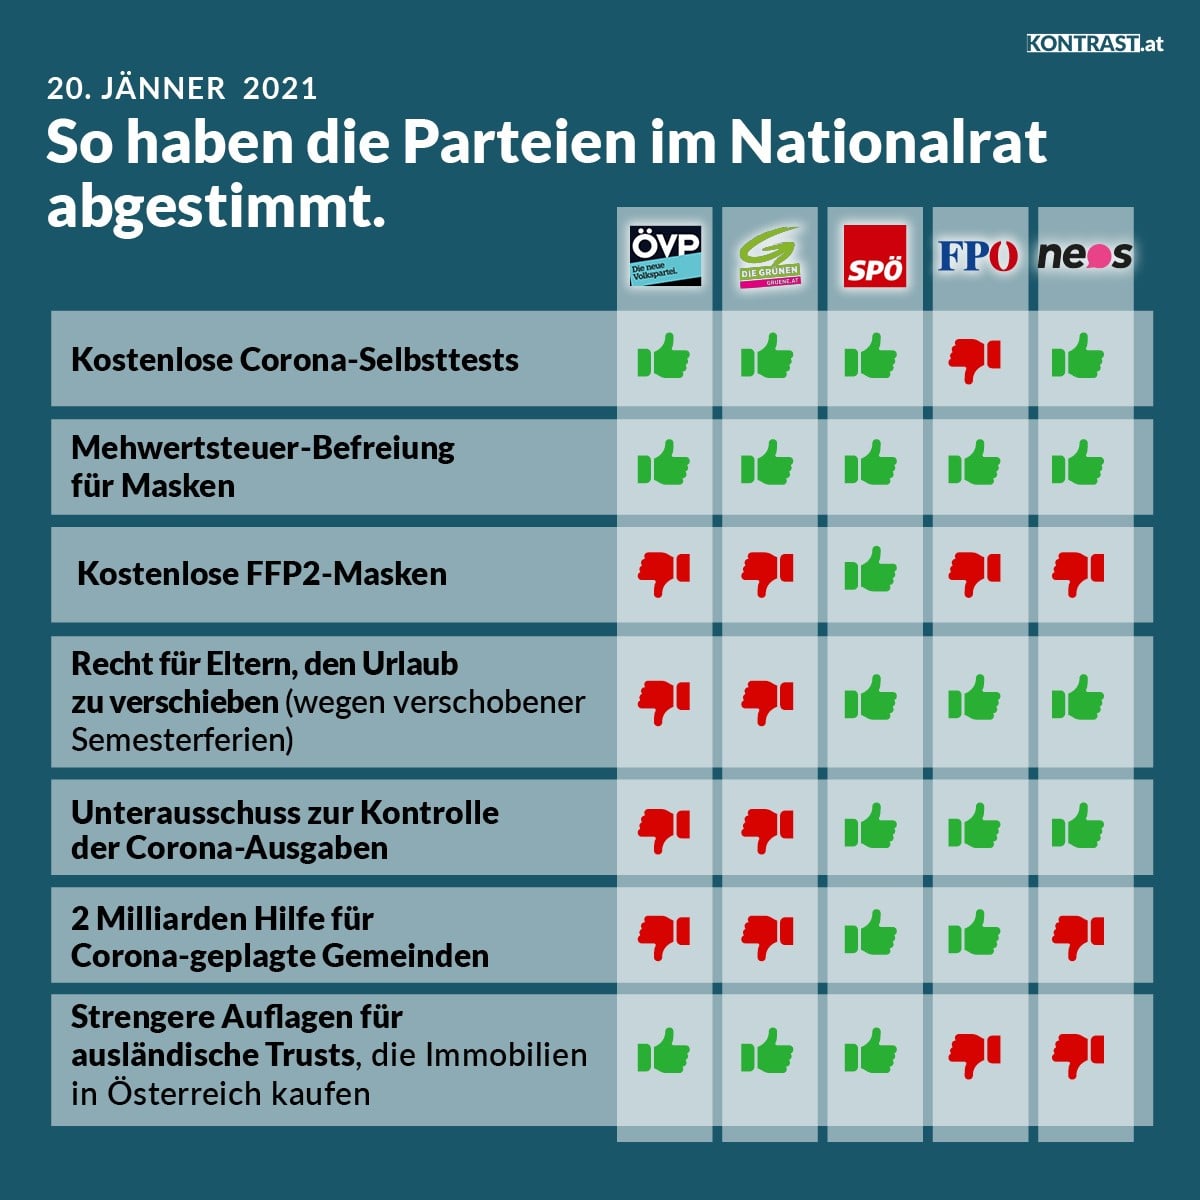 Abstimmungsverhalten im Nationalrat, 20. Jänner 2021